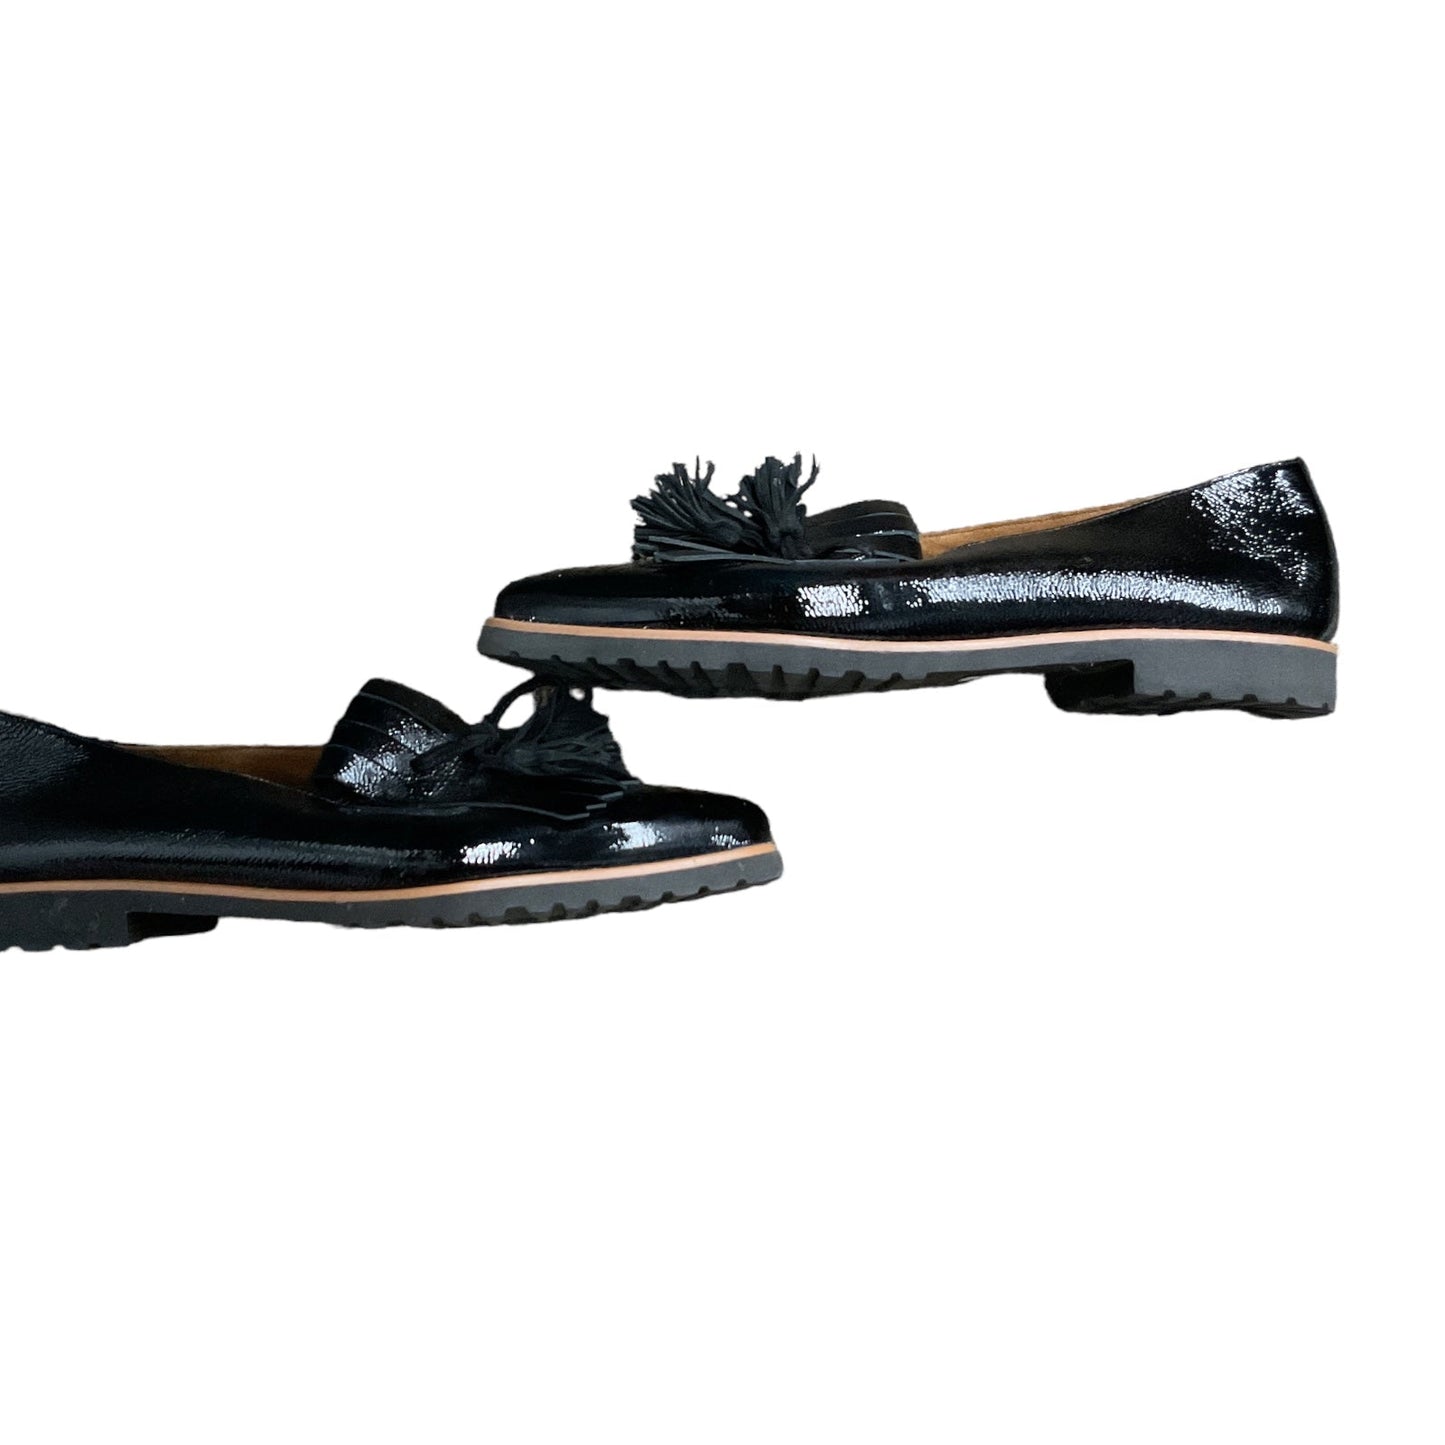 Black Shoes Flats Paul Green, Size 5.5